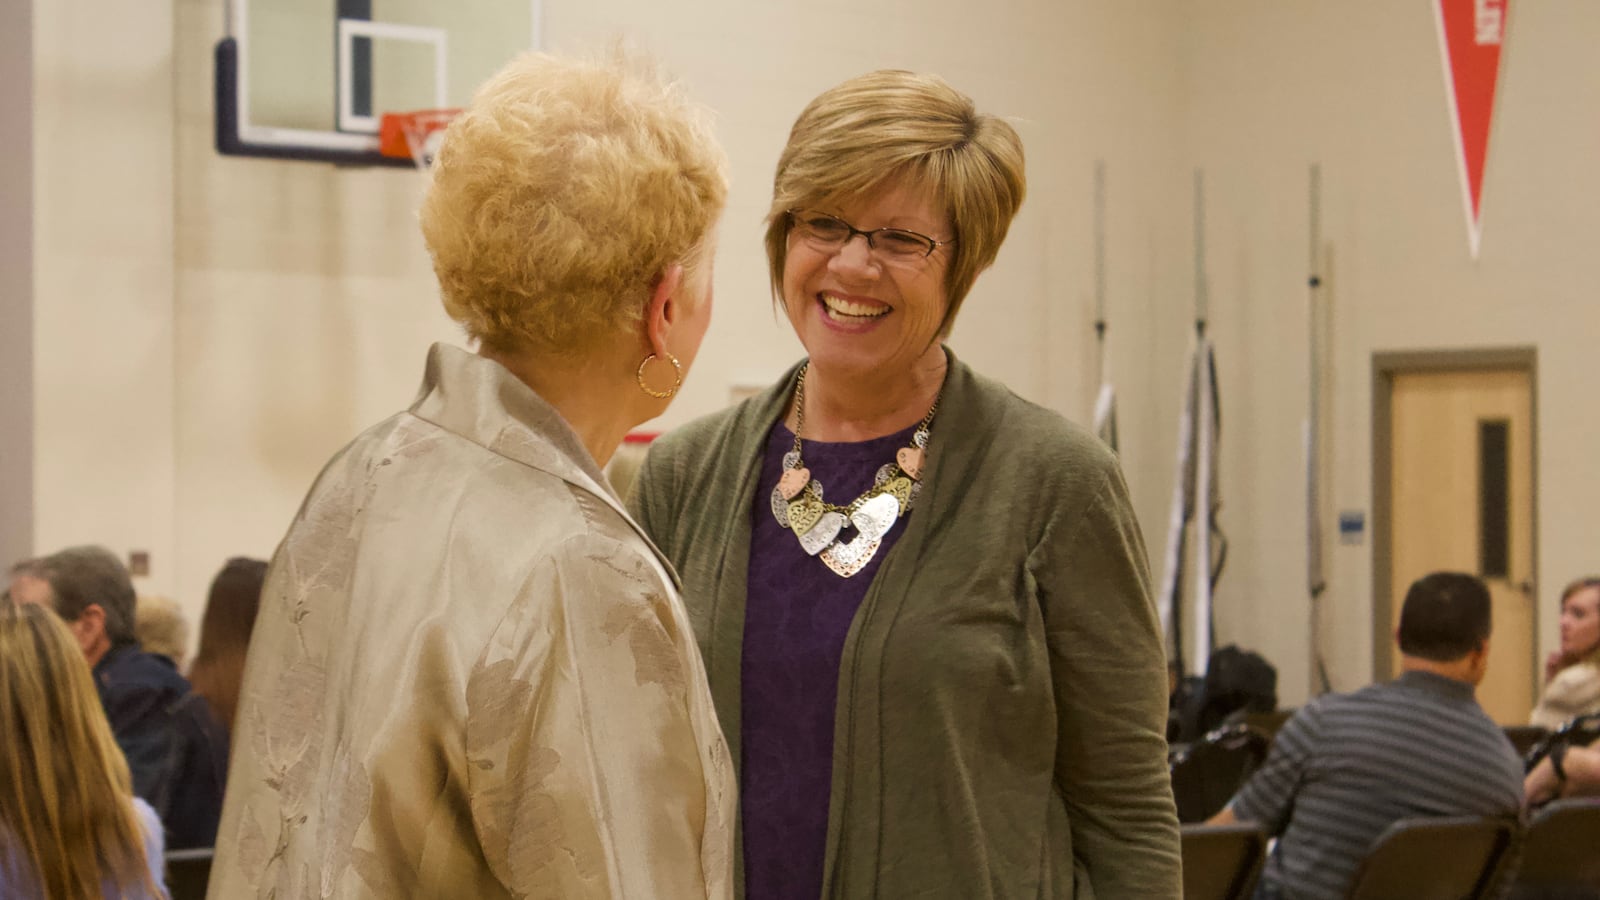 Pam Mazanec, right, greets former state board member Debora Scheffel at a Douglas County school board forum in November 2017. (Photo by Nic Garcia)